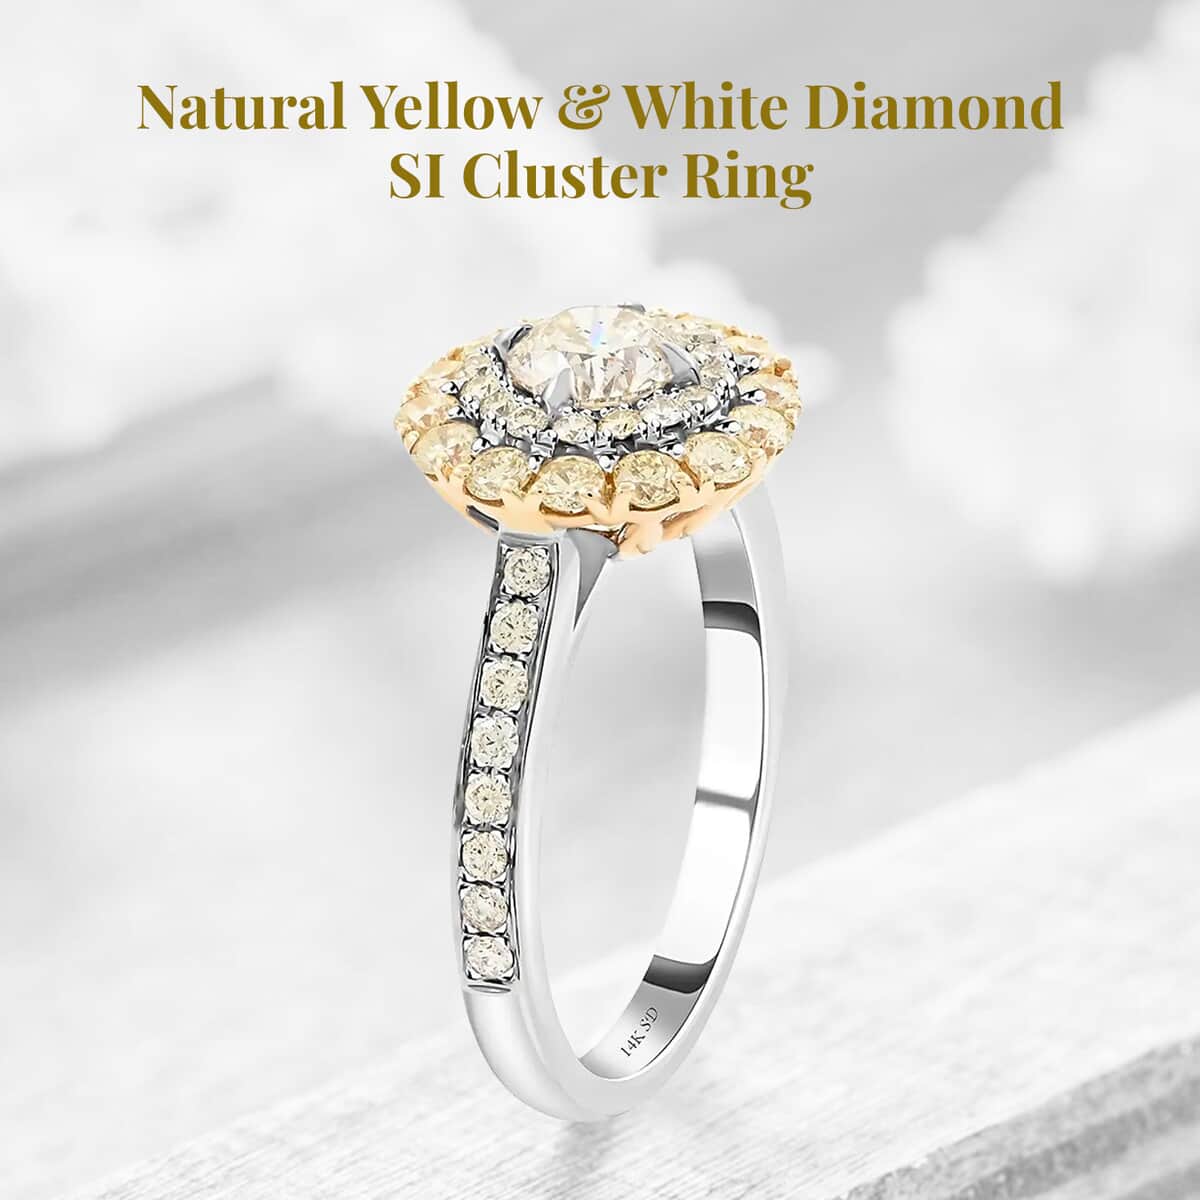 Modani 14K White & Yellow Gold Natural Yellow and White Diamond SI Ring (Size 8.0) 1.25 ctw image number 2